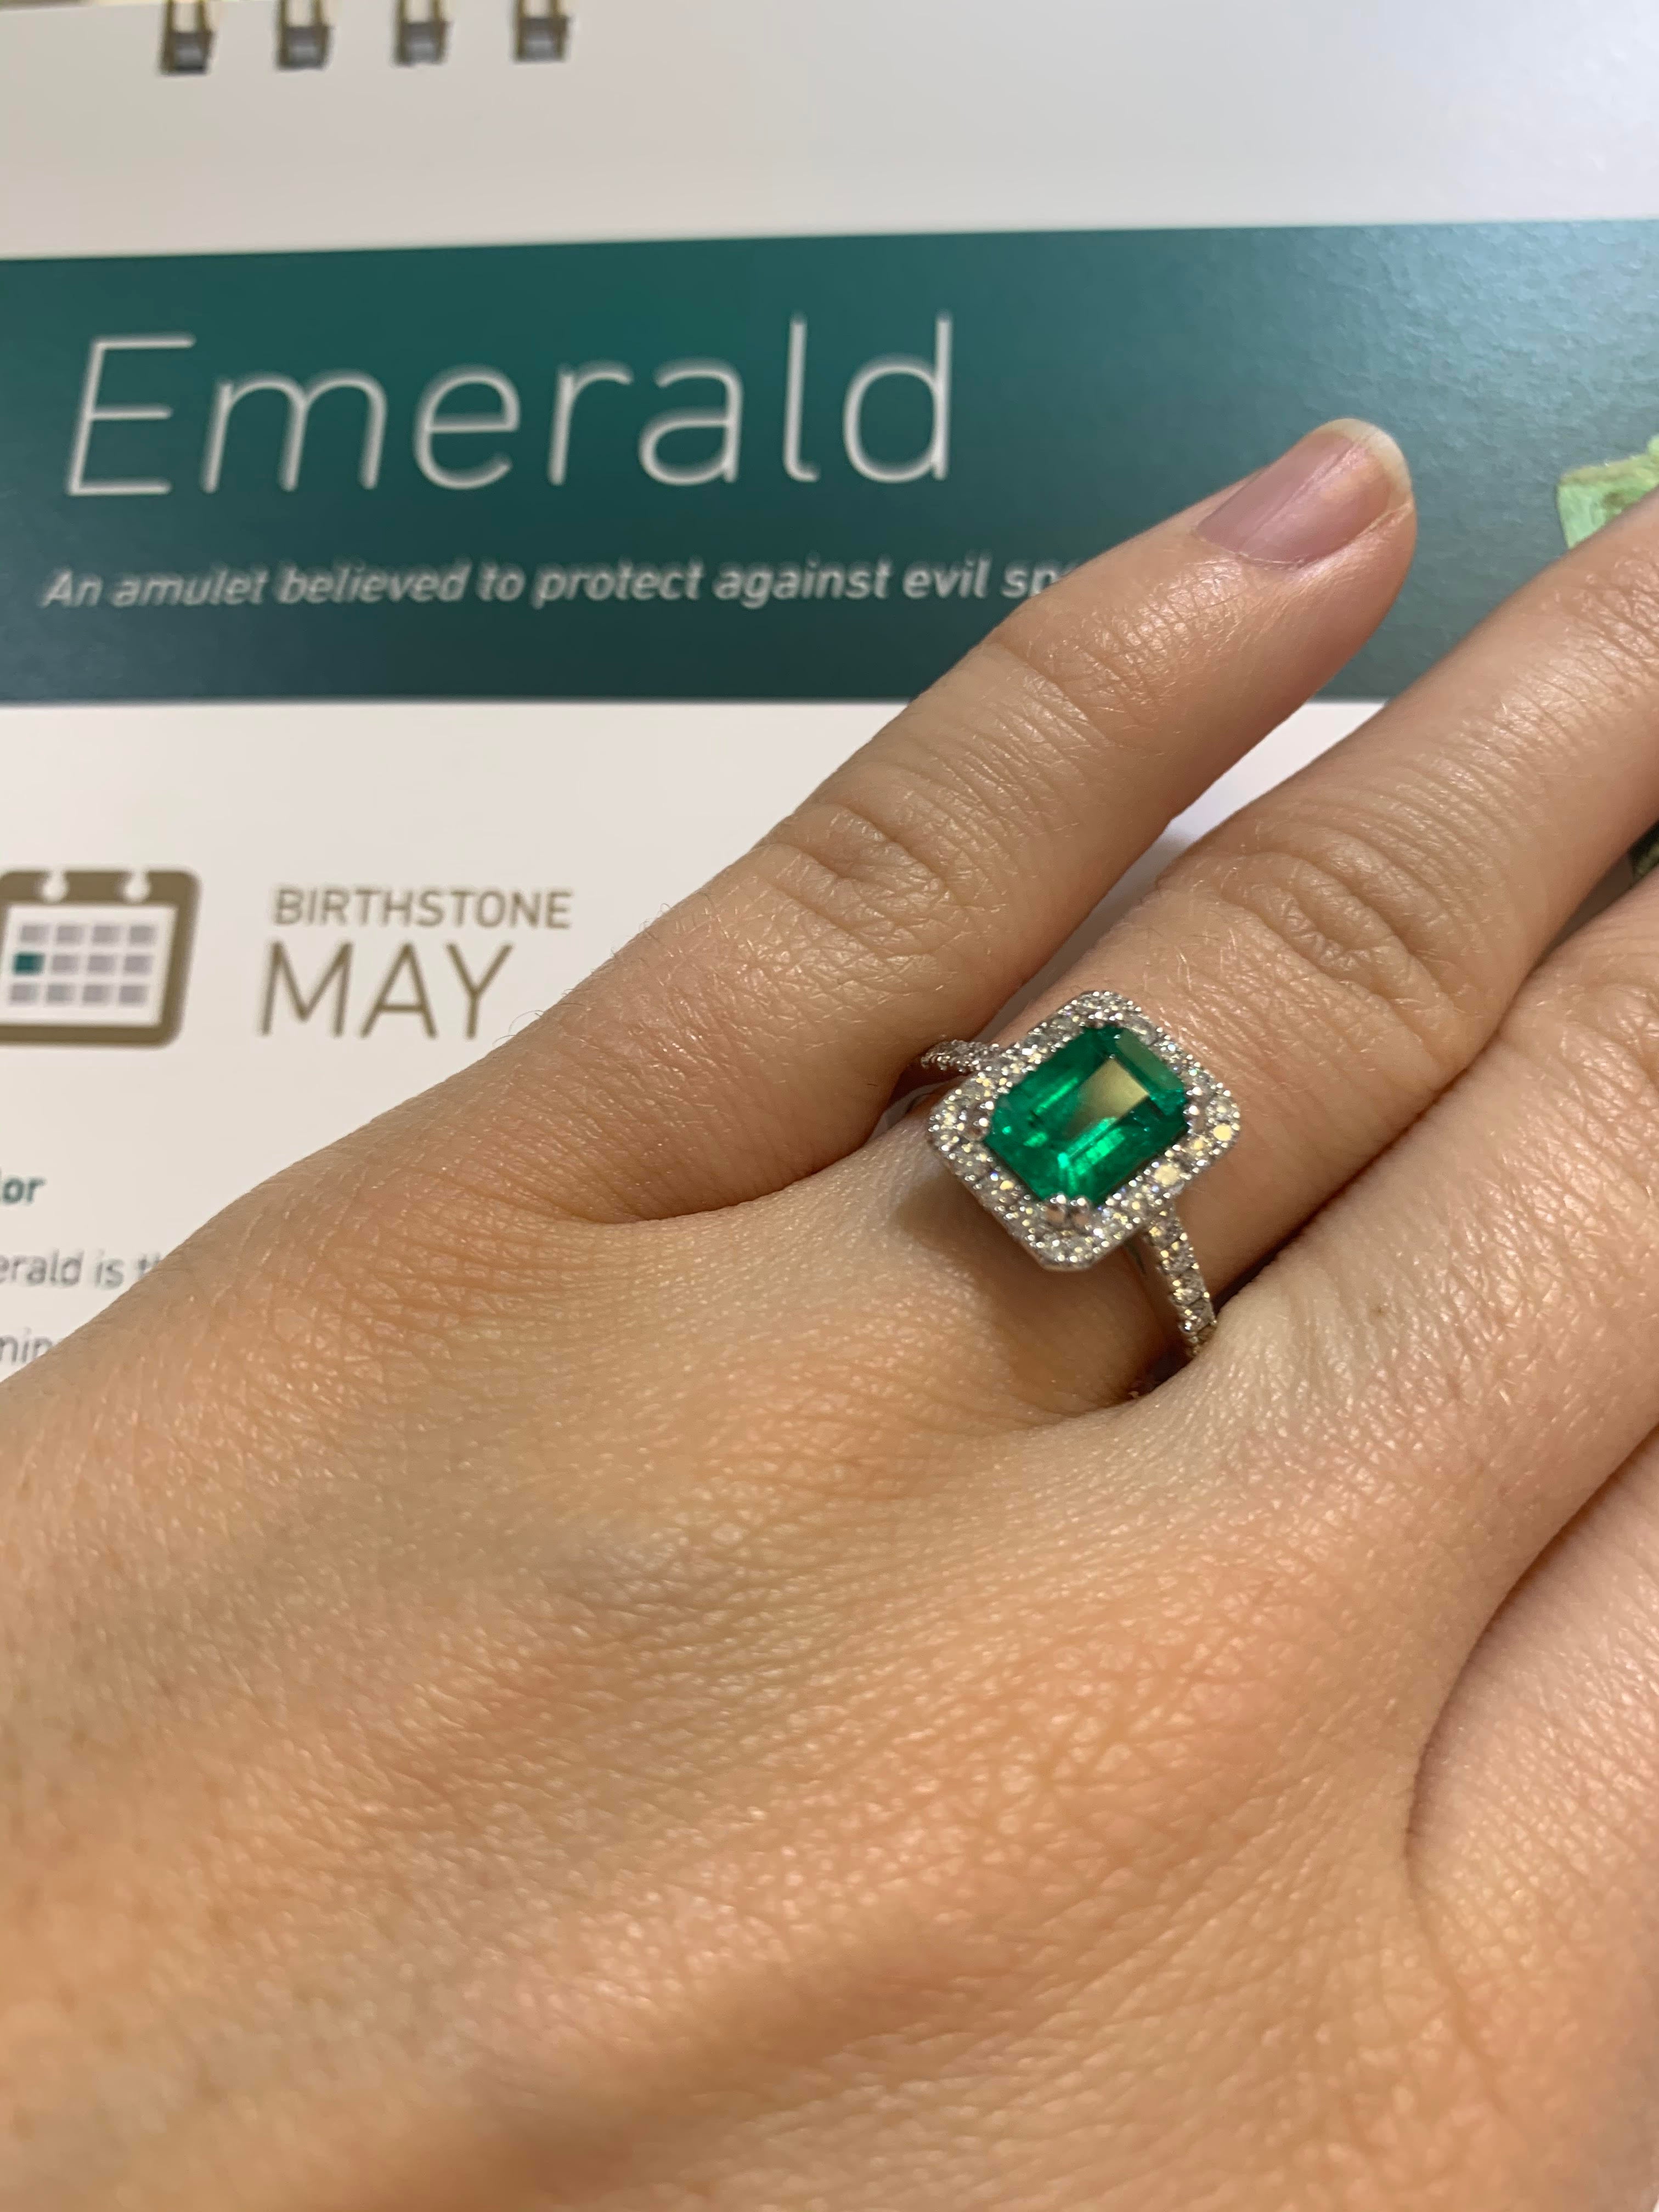 Emerald Green Gemstones for All!